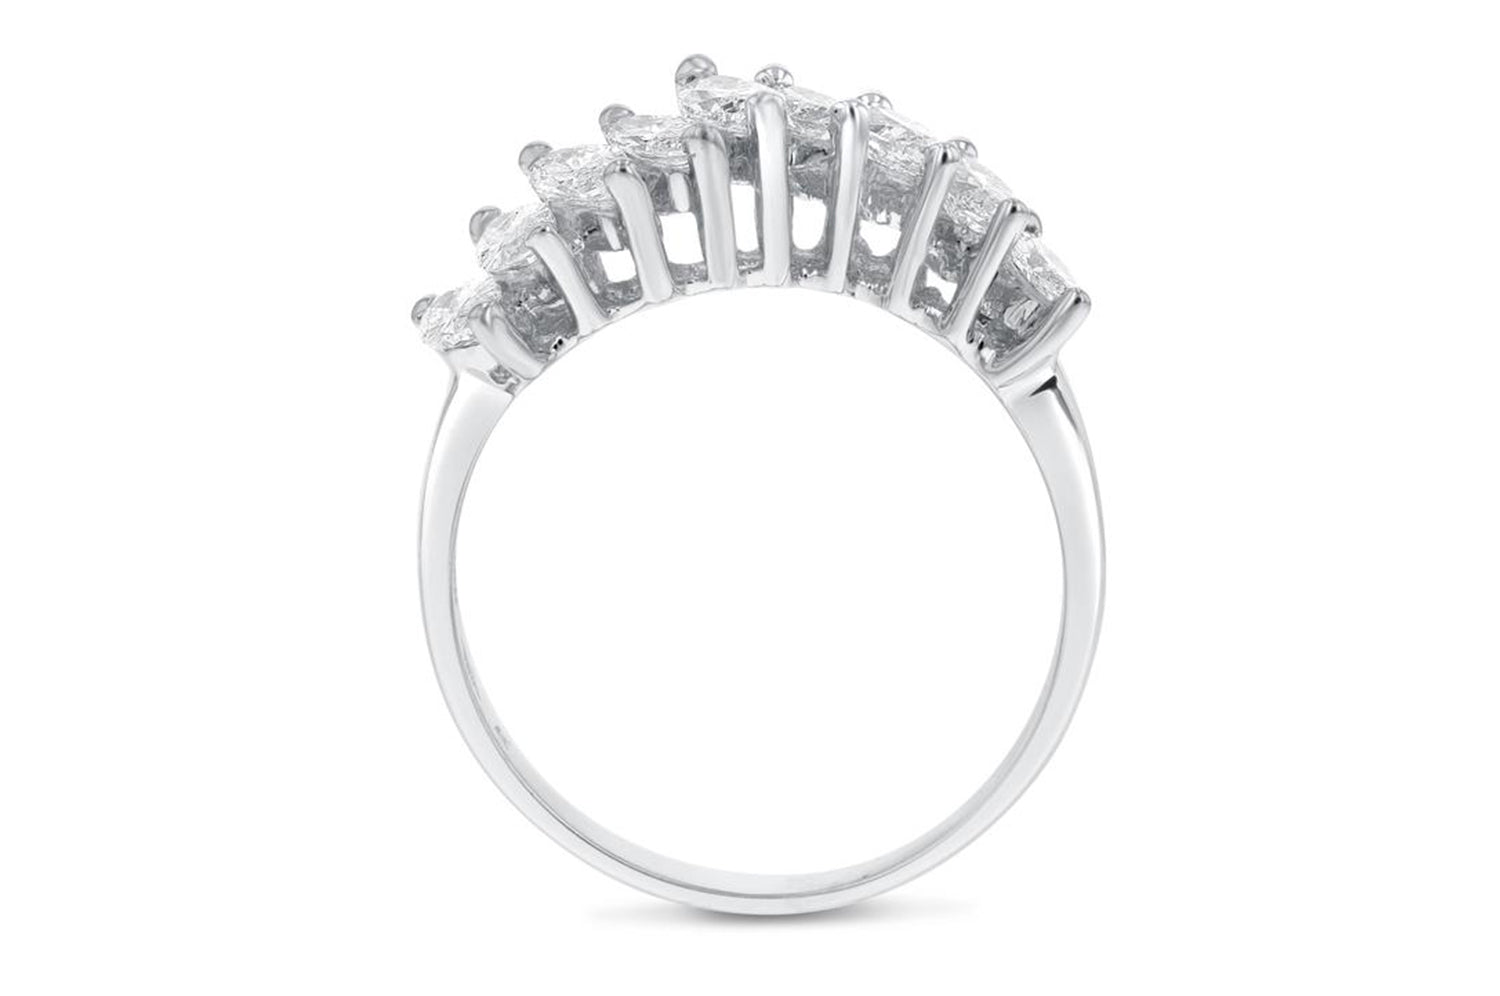 18K White Gold Diamond Engagement Ring, 1.06 Carats